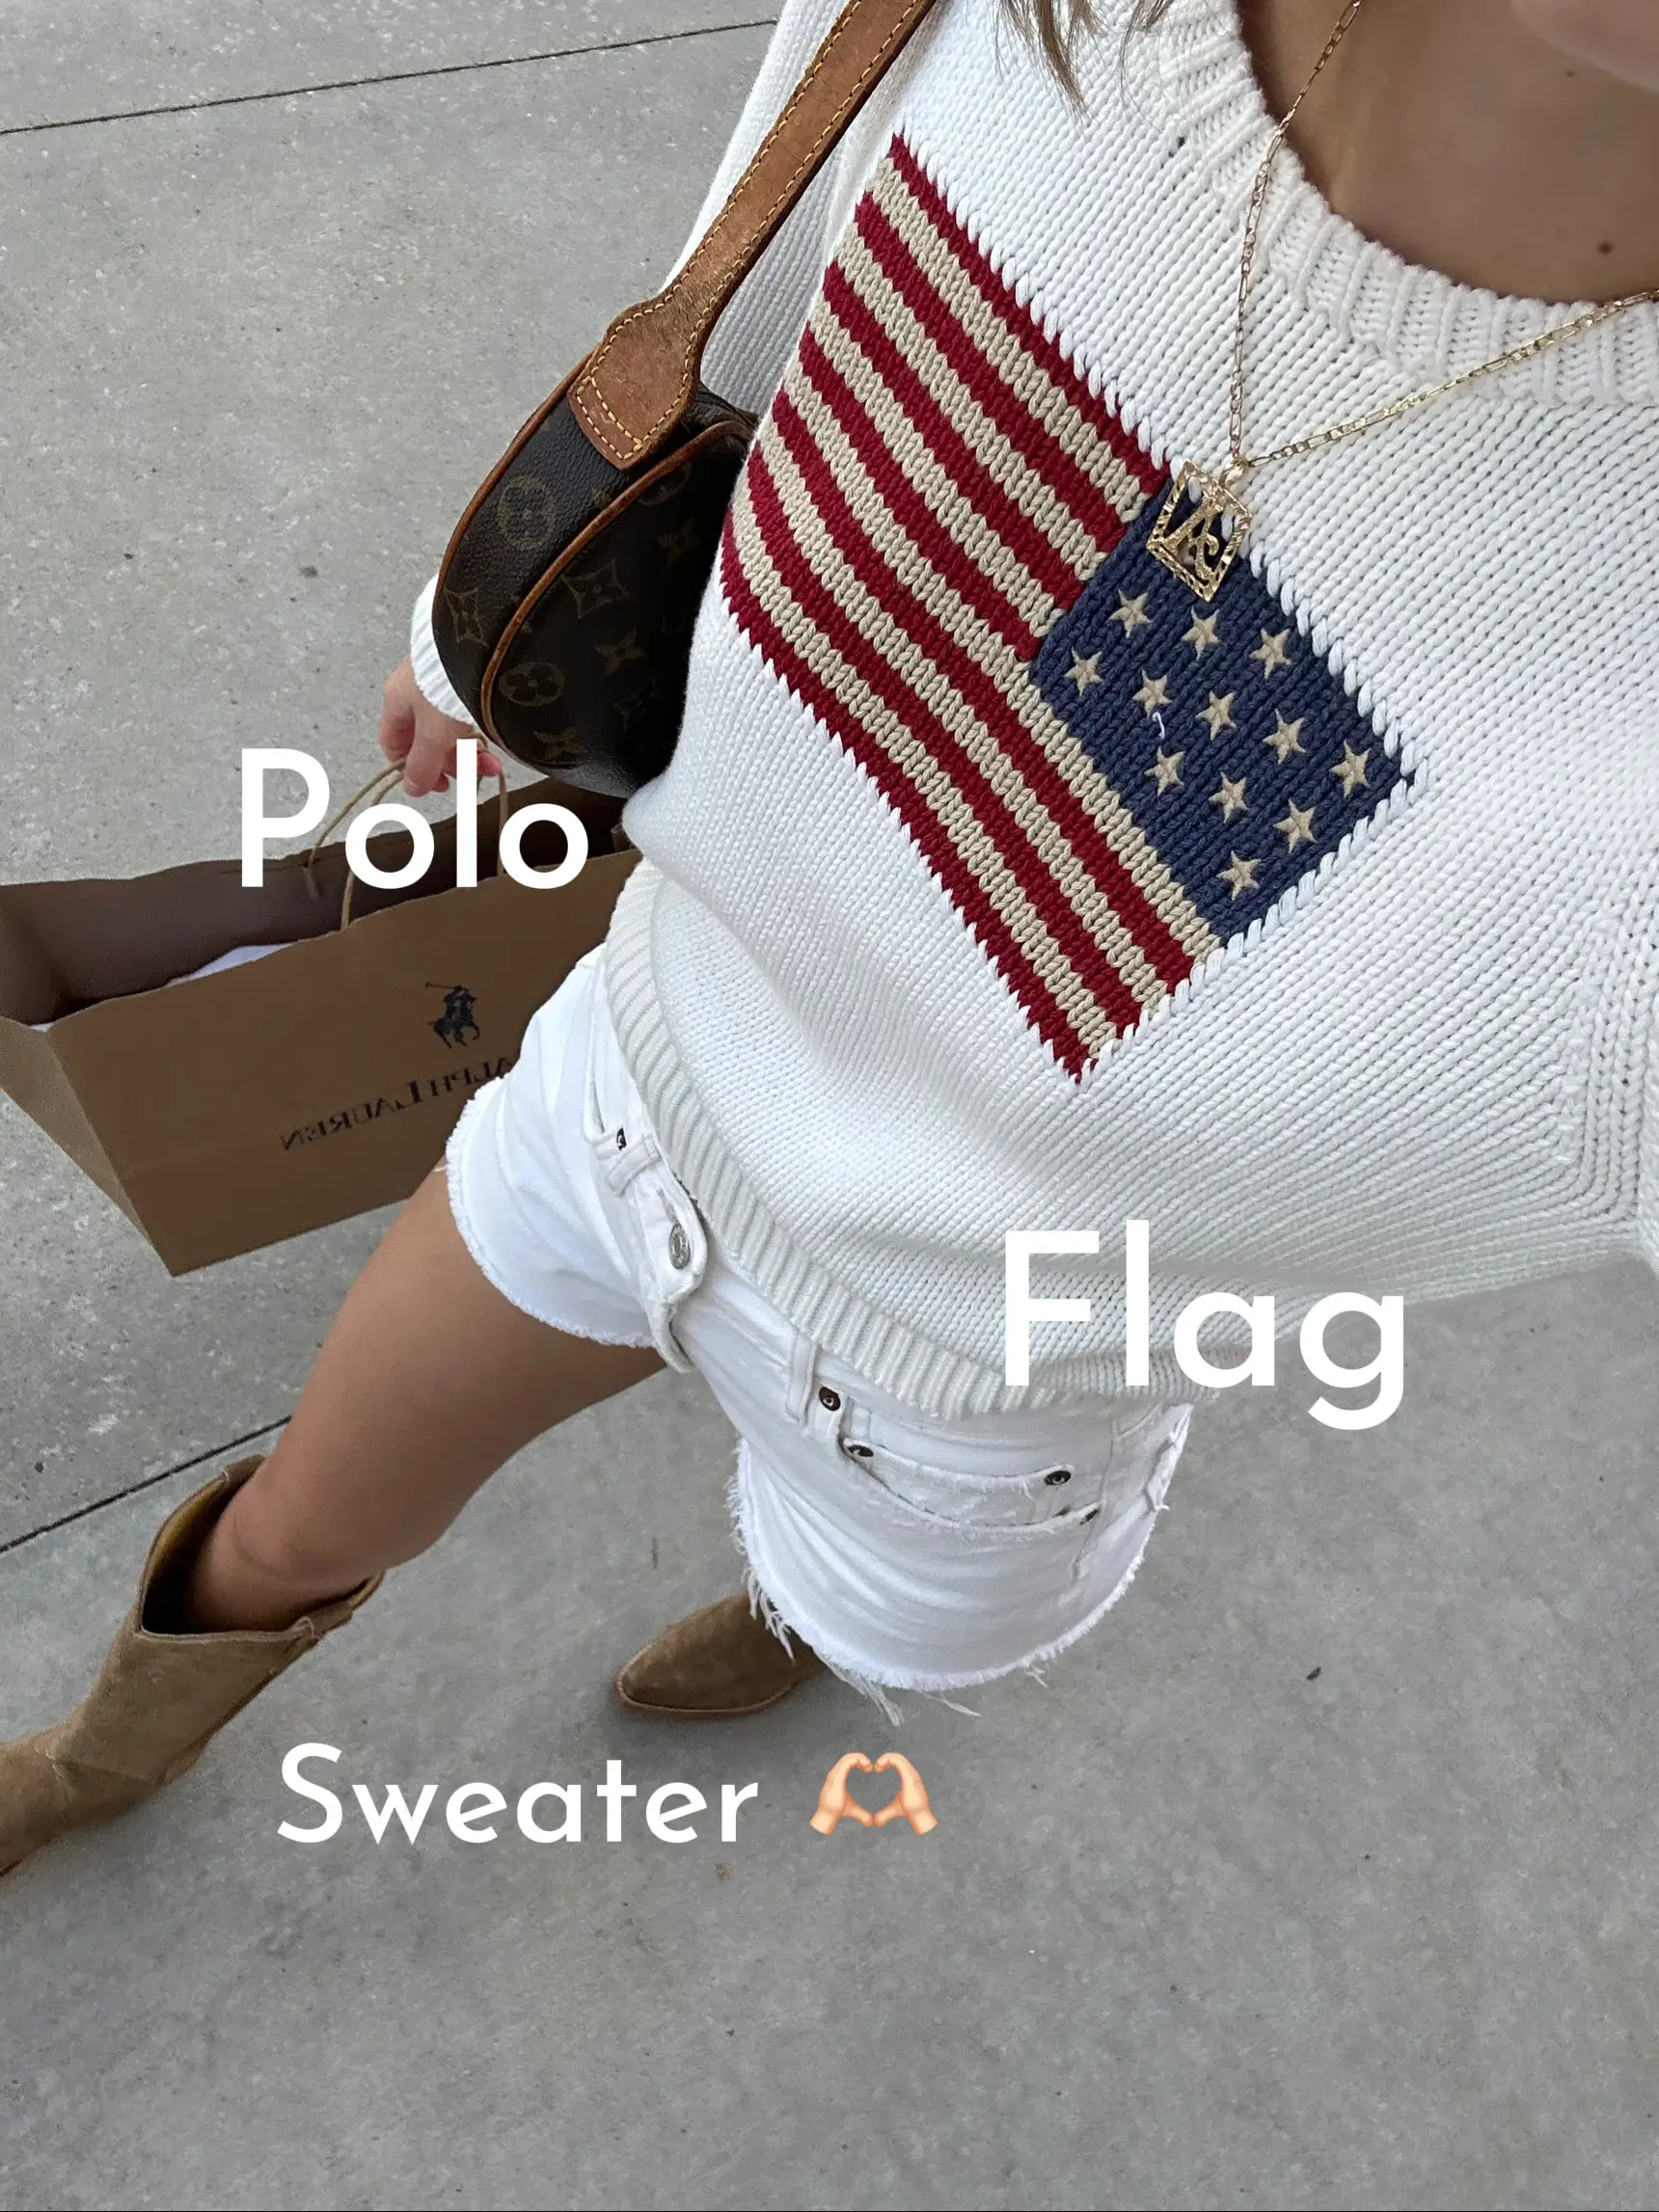 Polo Ralph Lauren flag sweater details 🫶🏻's images